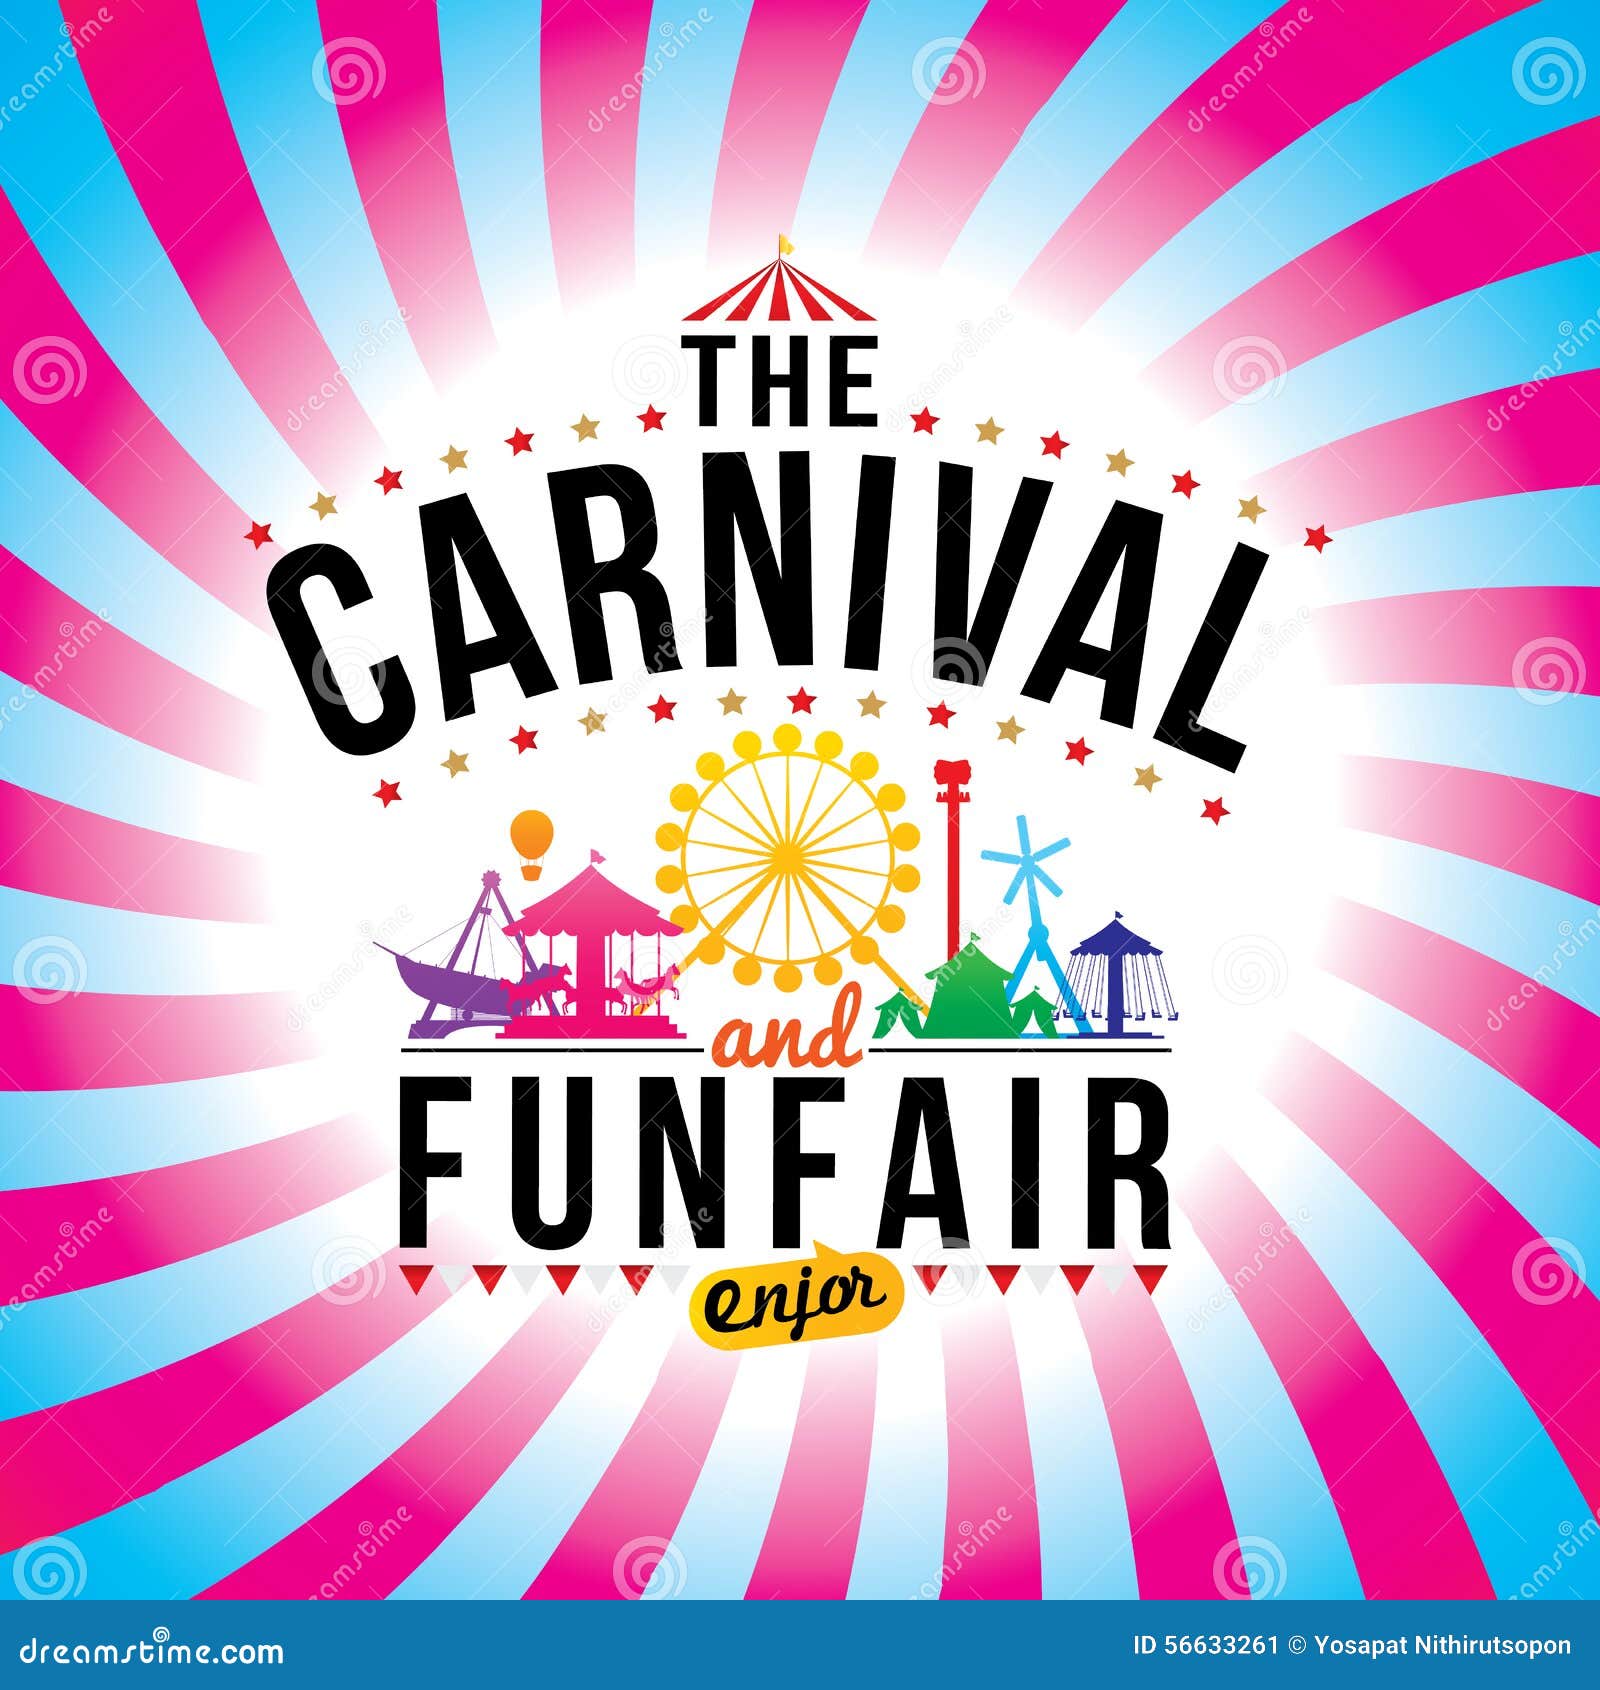 the carnival funfair